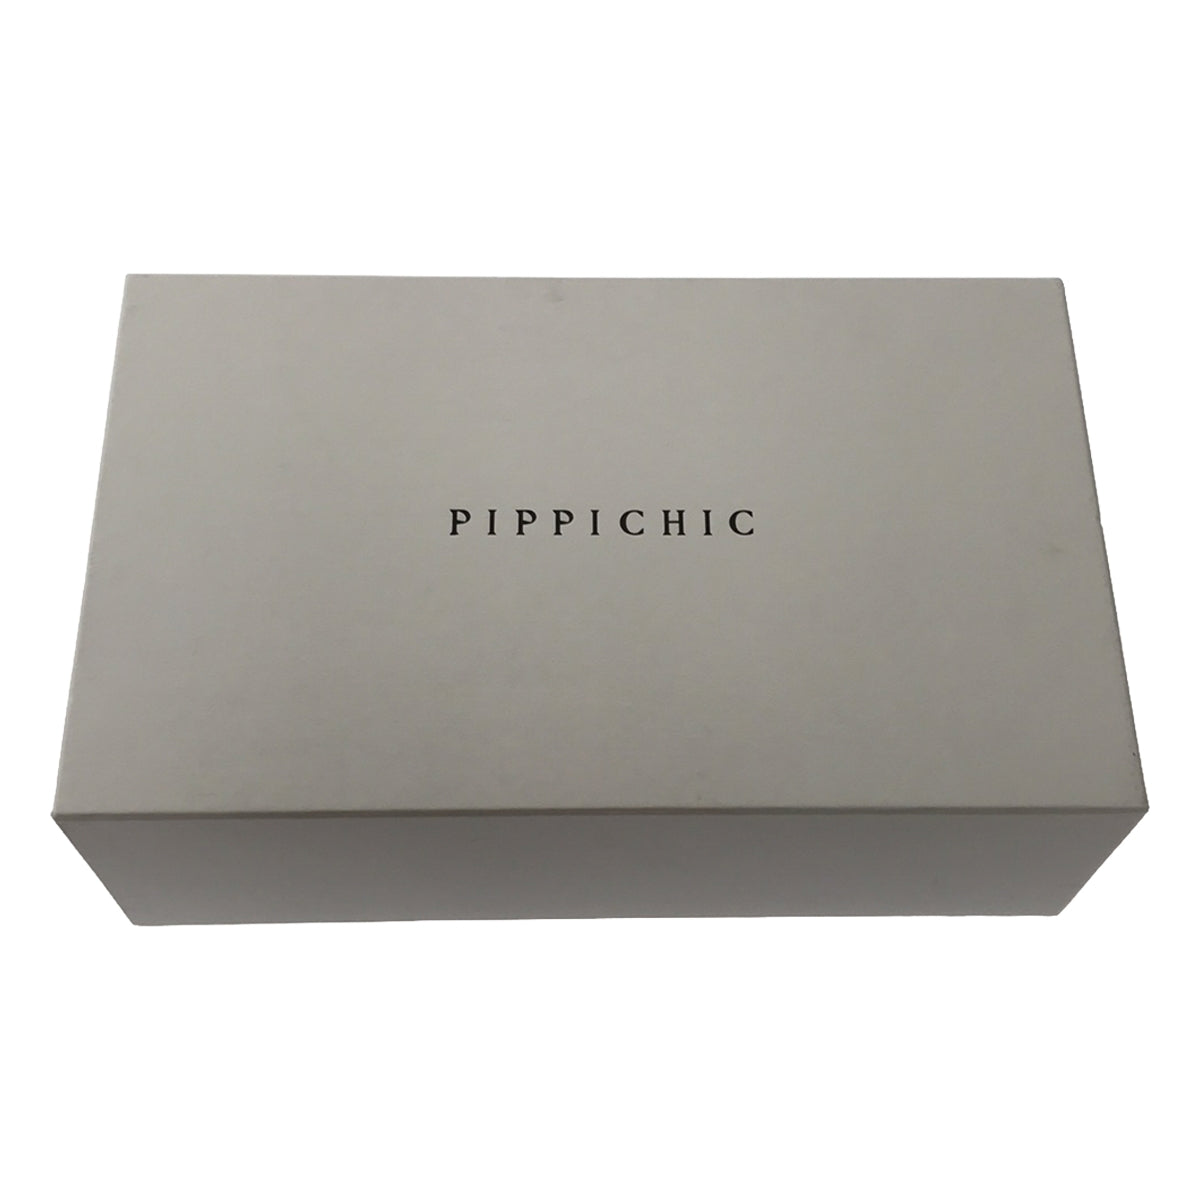 PIPPICHIC / ピッピシック | GIGI STN / 装飾 スエード レザー サンダル | 37 1/2 | レディース